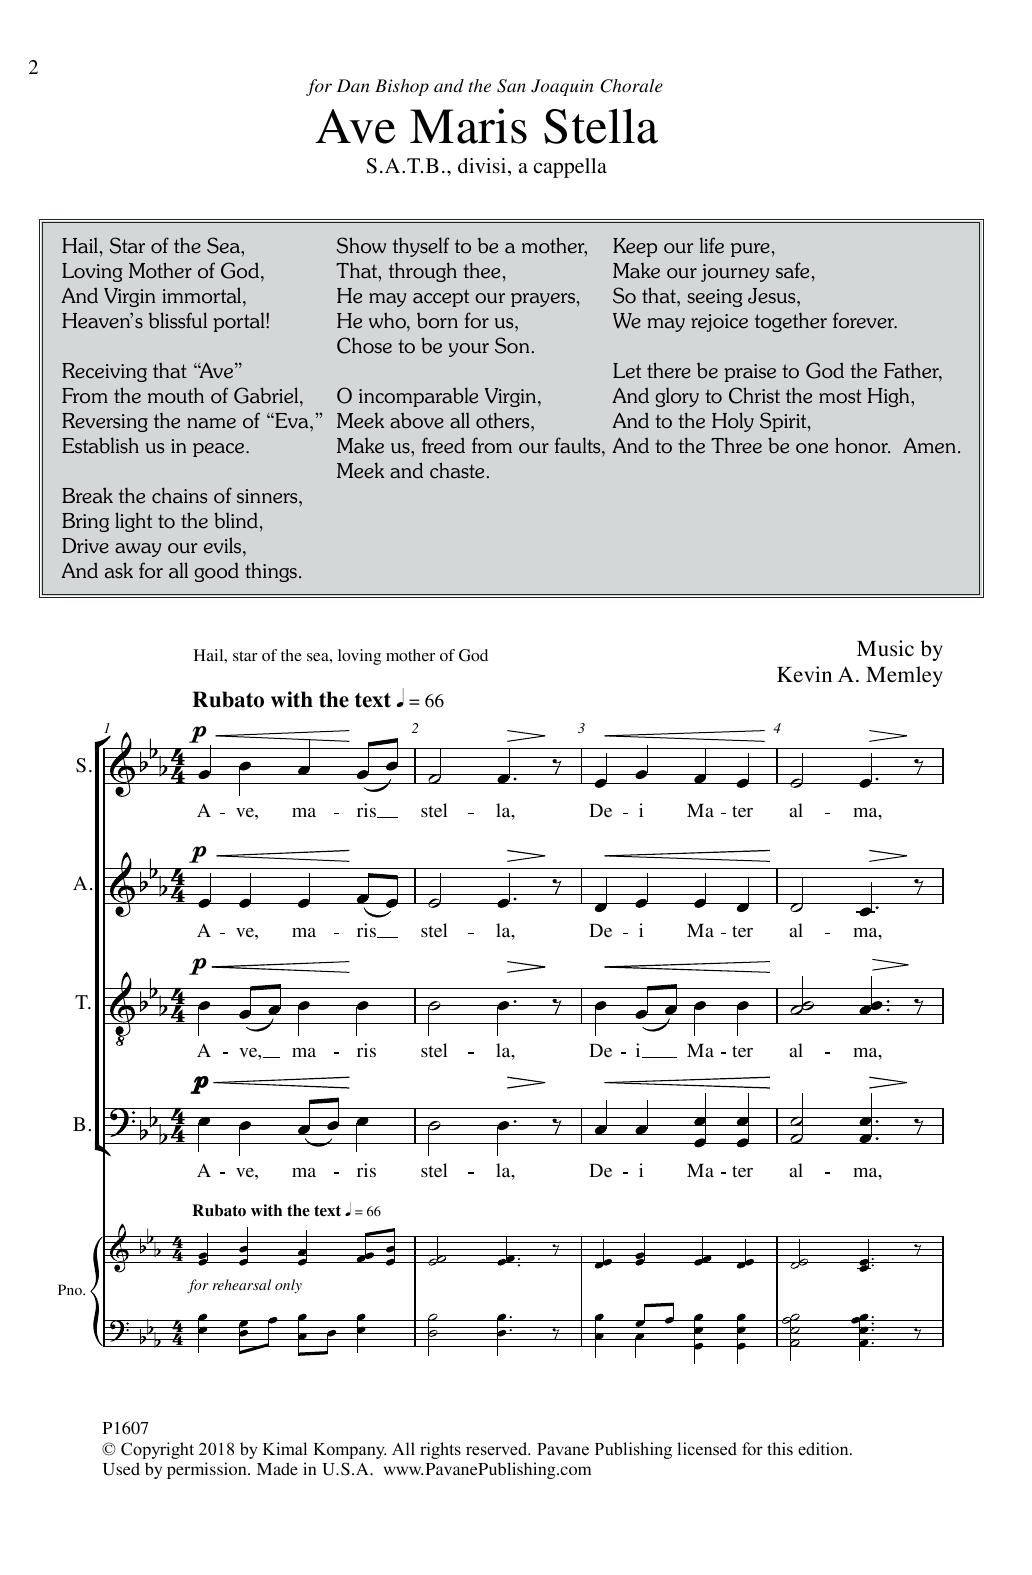 Kevin A. Memley Ave Maris Stella Sheet Music Notes & Chords for SATB Choir - Download or Print PDF